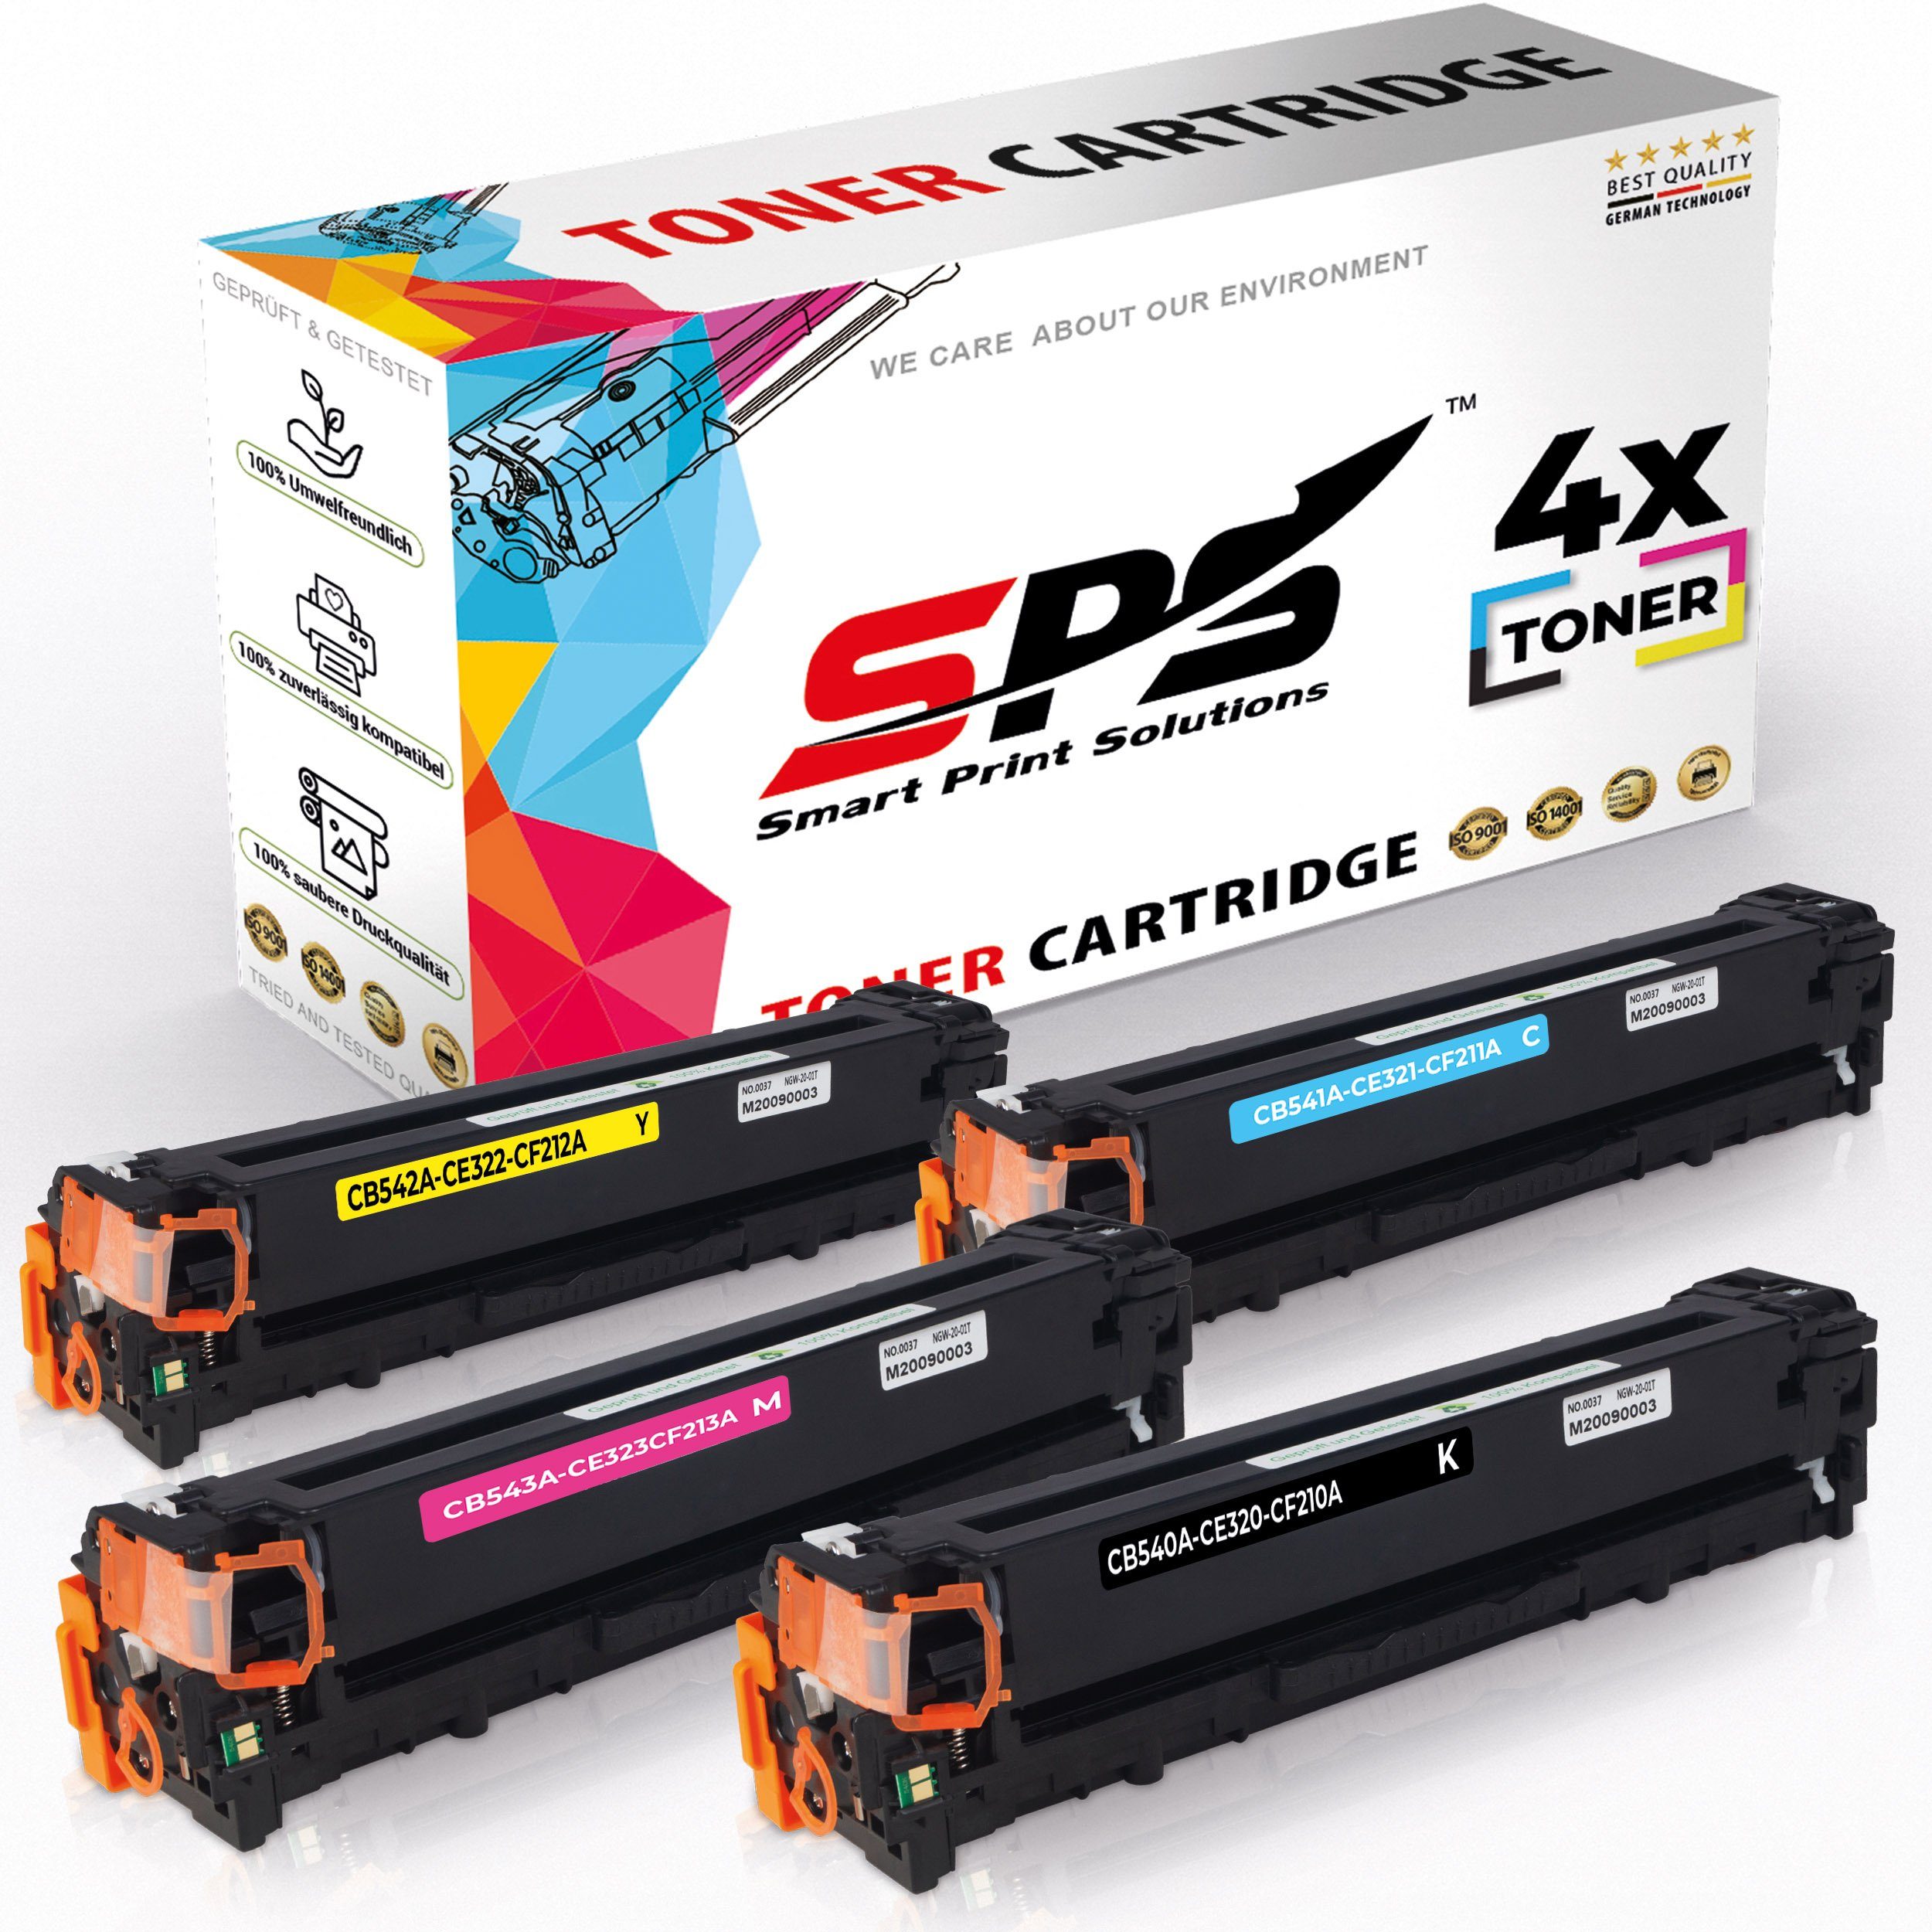 Laserjet 500 Schwarz1x DIN SPS Color HP Toner(1 Druckerpapier 1x Gelb), Cyan, x 4x Tonerkartusche (4er 125A, CP1514N Pack, Magenta, A4 1x 1x für Kompatibel Blatt)